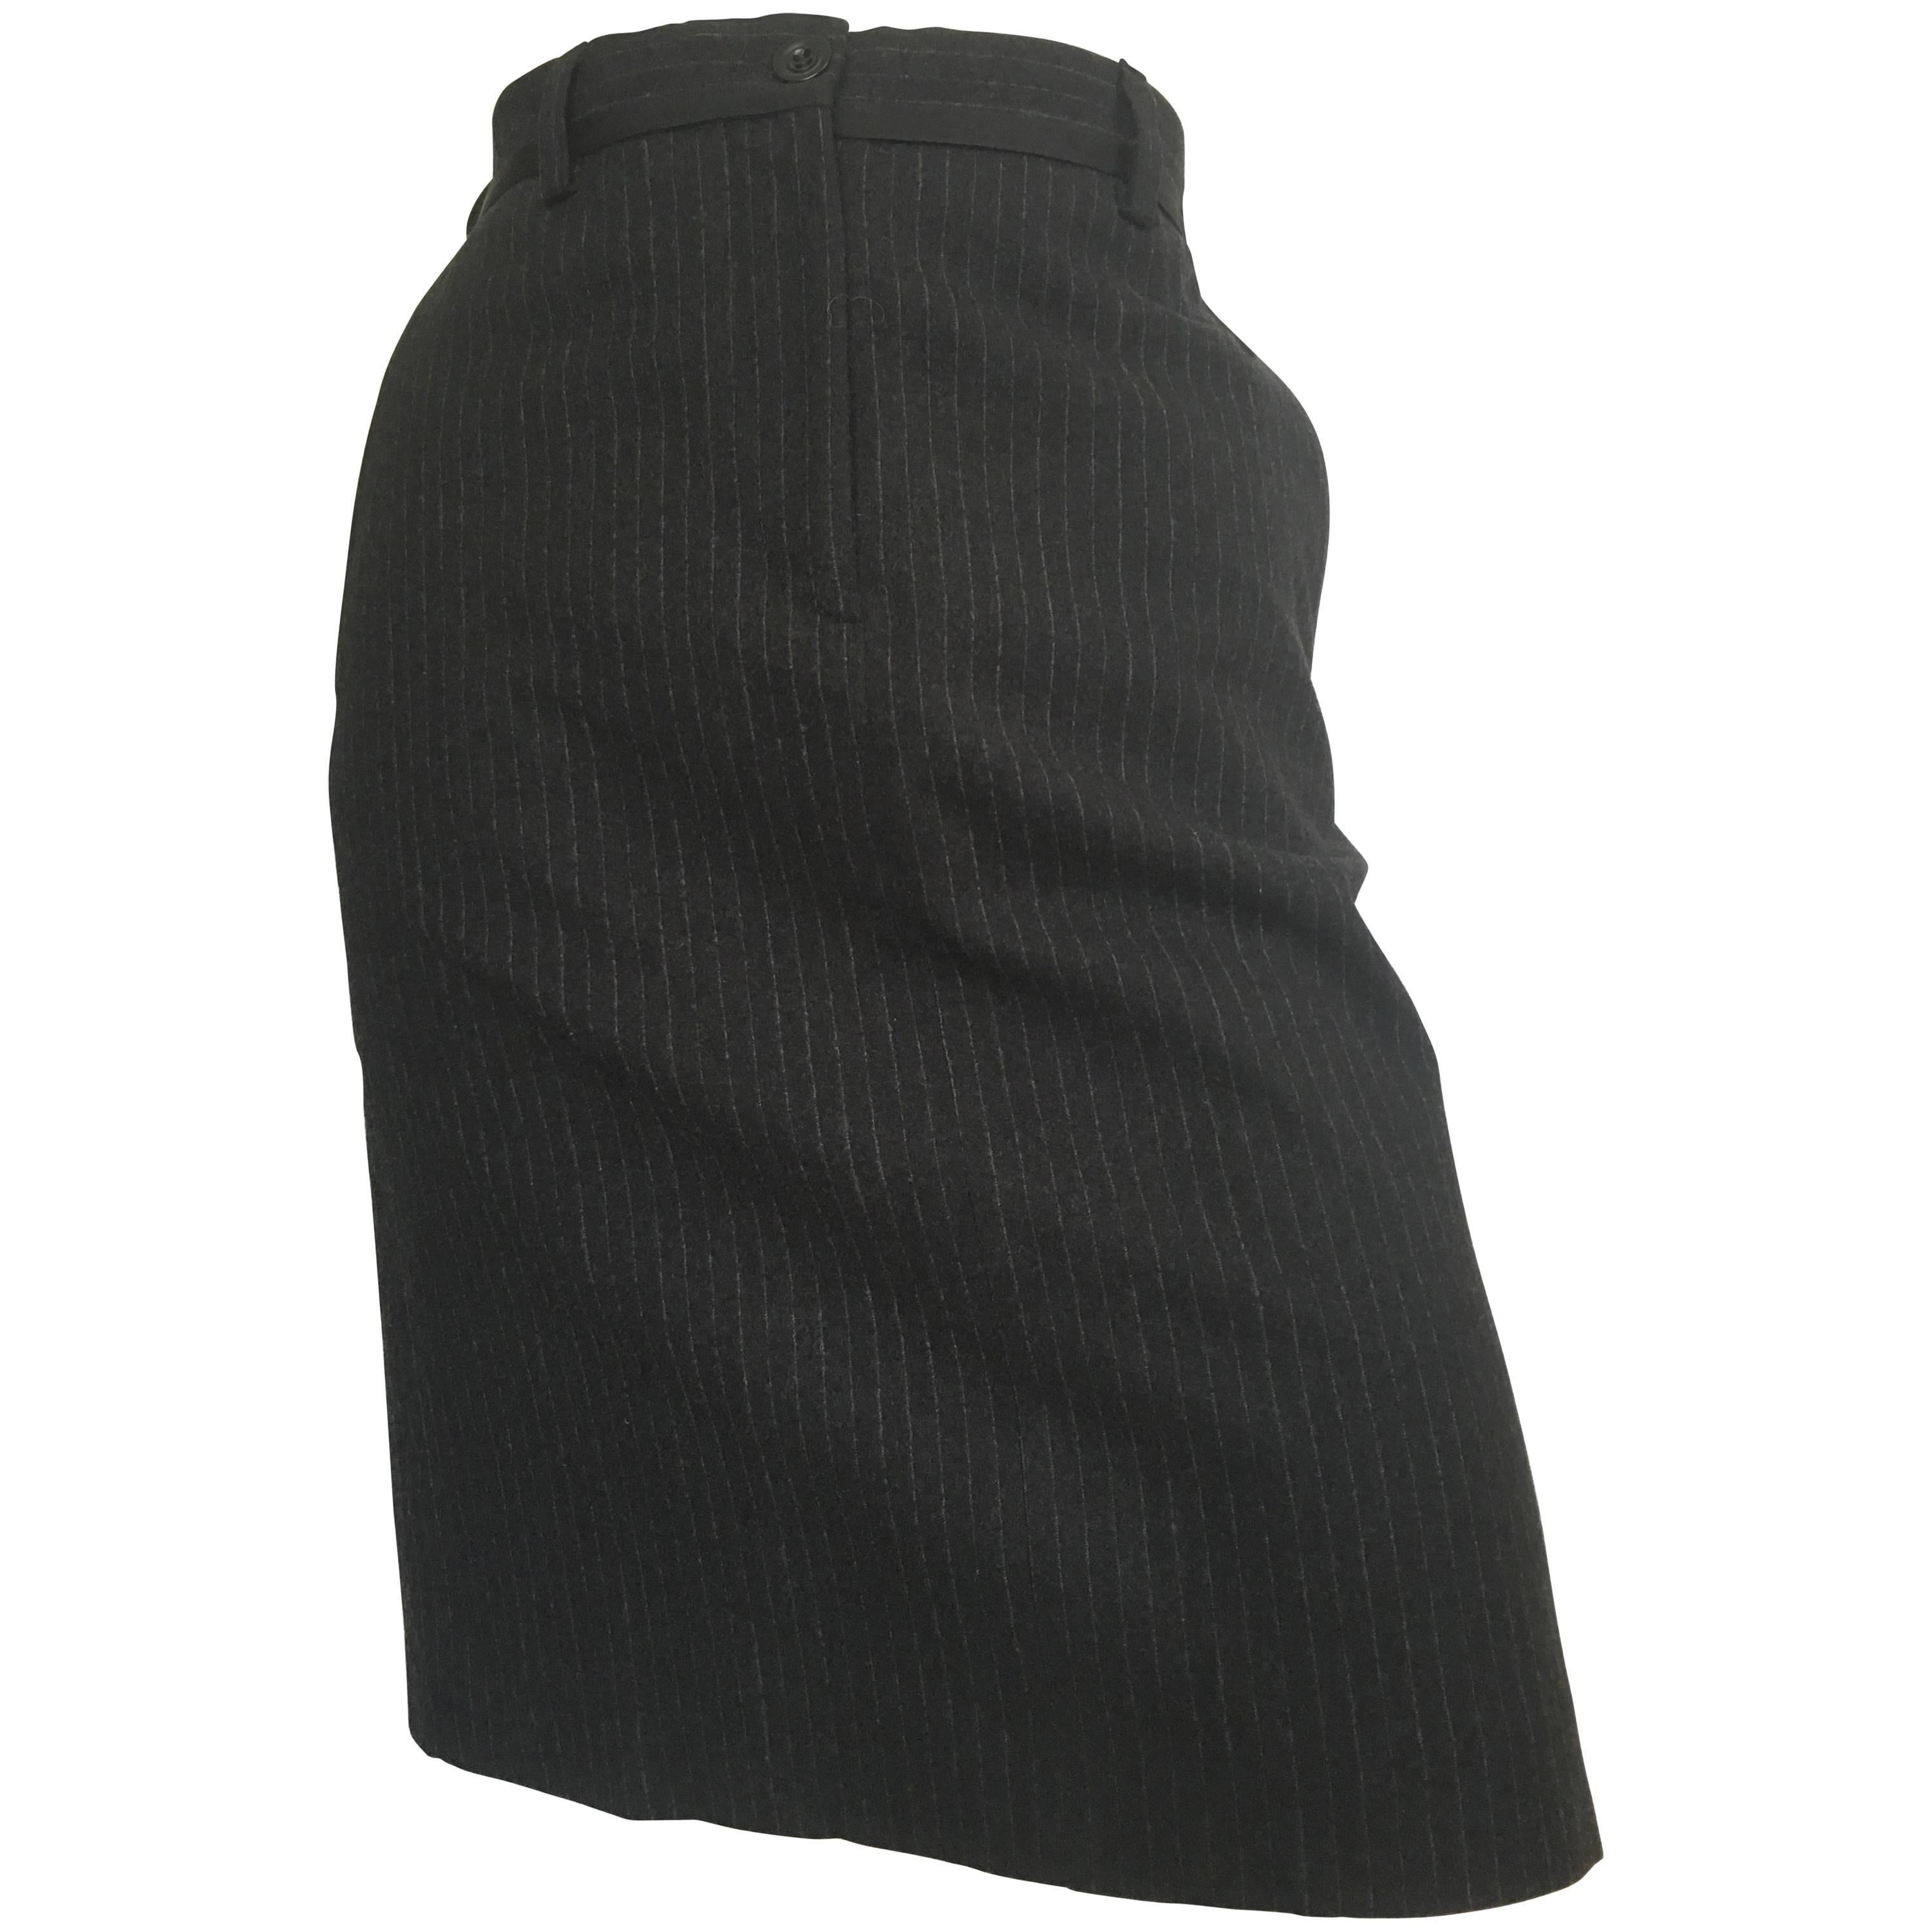 Dries Van Noten Black Pen Strip Wool Skirt with Pockets Size 4/6. For Sale